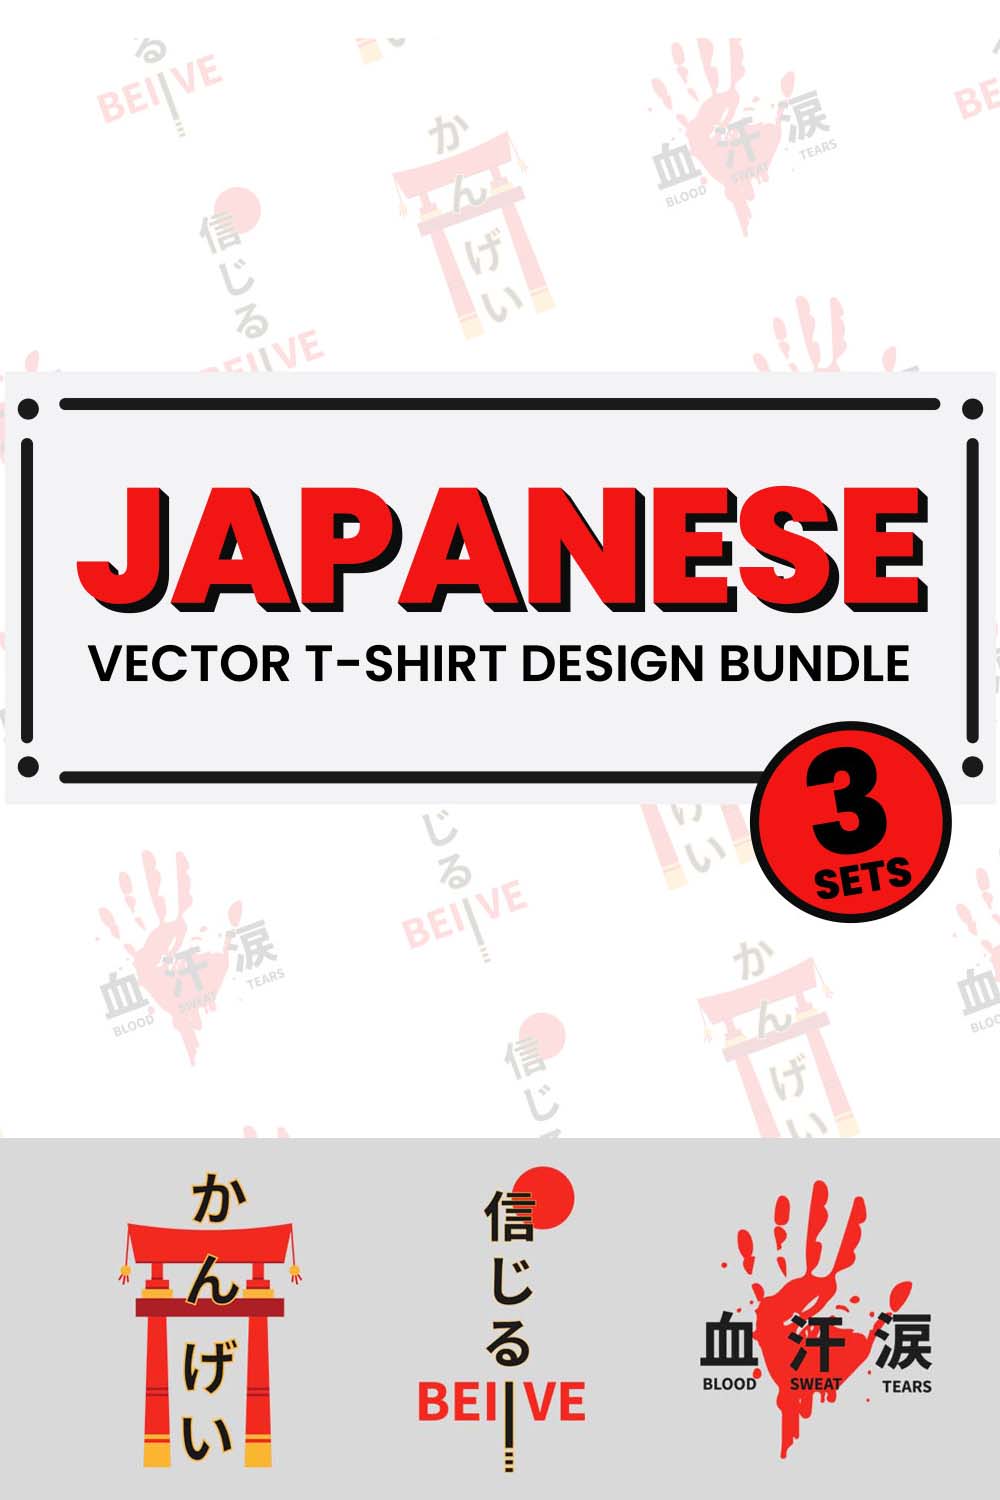 Japanese Inspired Vector T-Shirt Design Bundle | SVG,PNG,AI,EPS,JPG pinterest preview image.